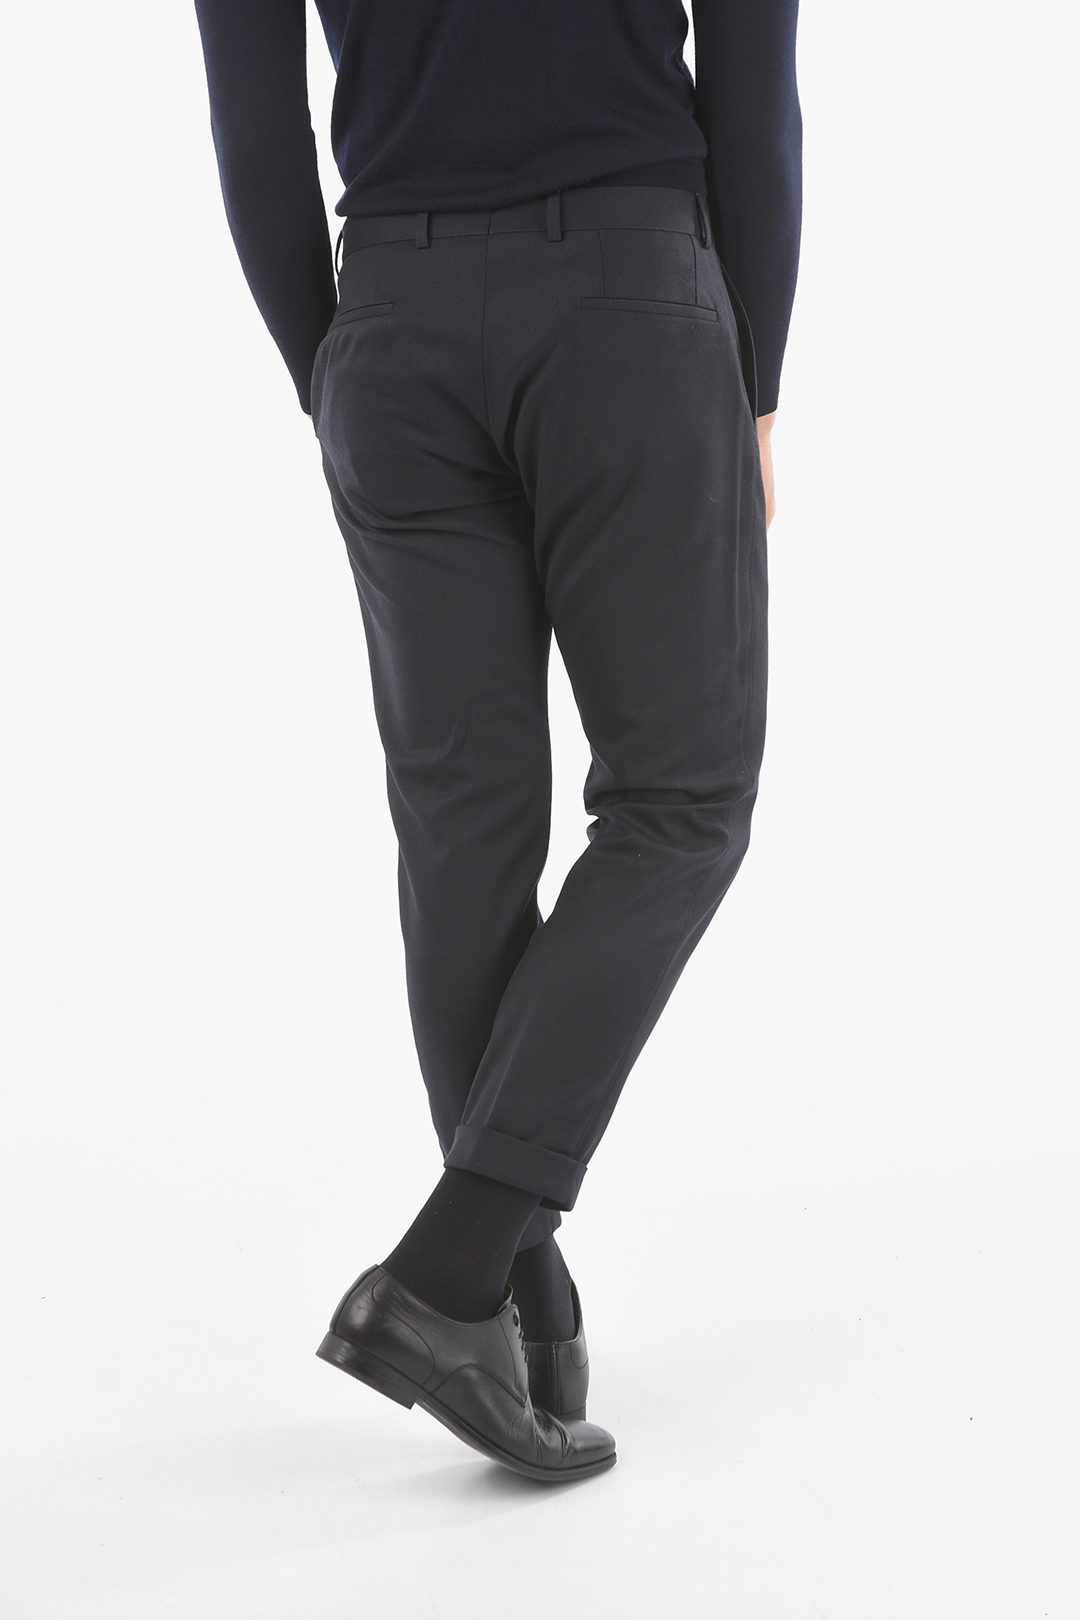 Gentleman elegant and comfortable mens trousers | Mens pants fashion,  Designer clothes for men, Dress suits for men